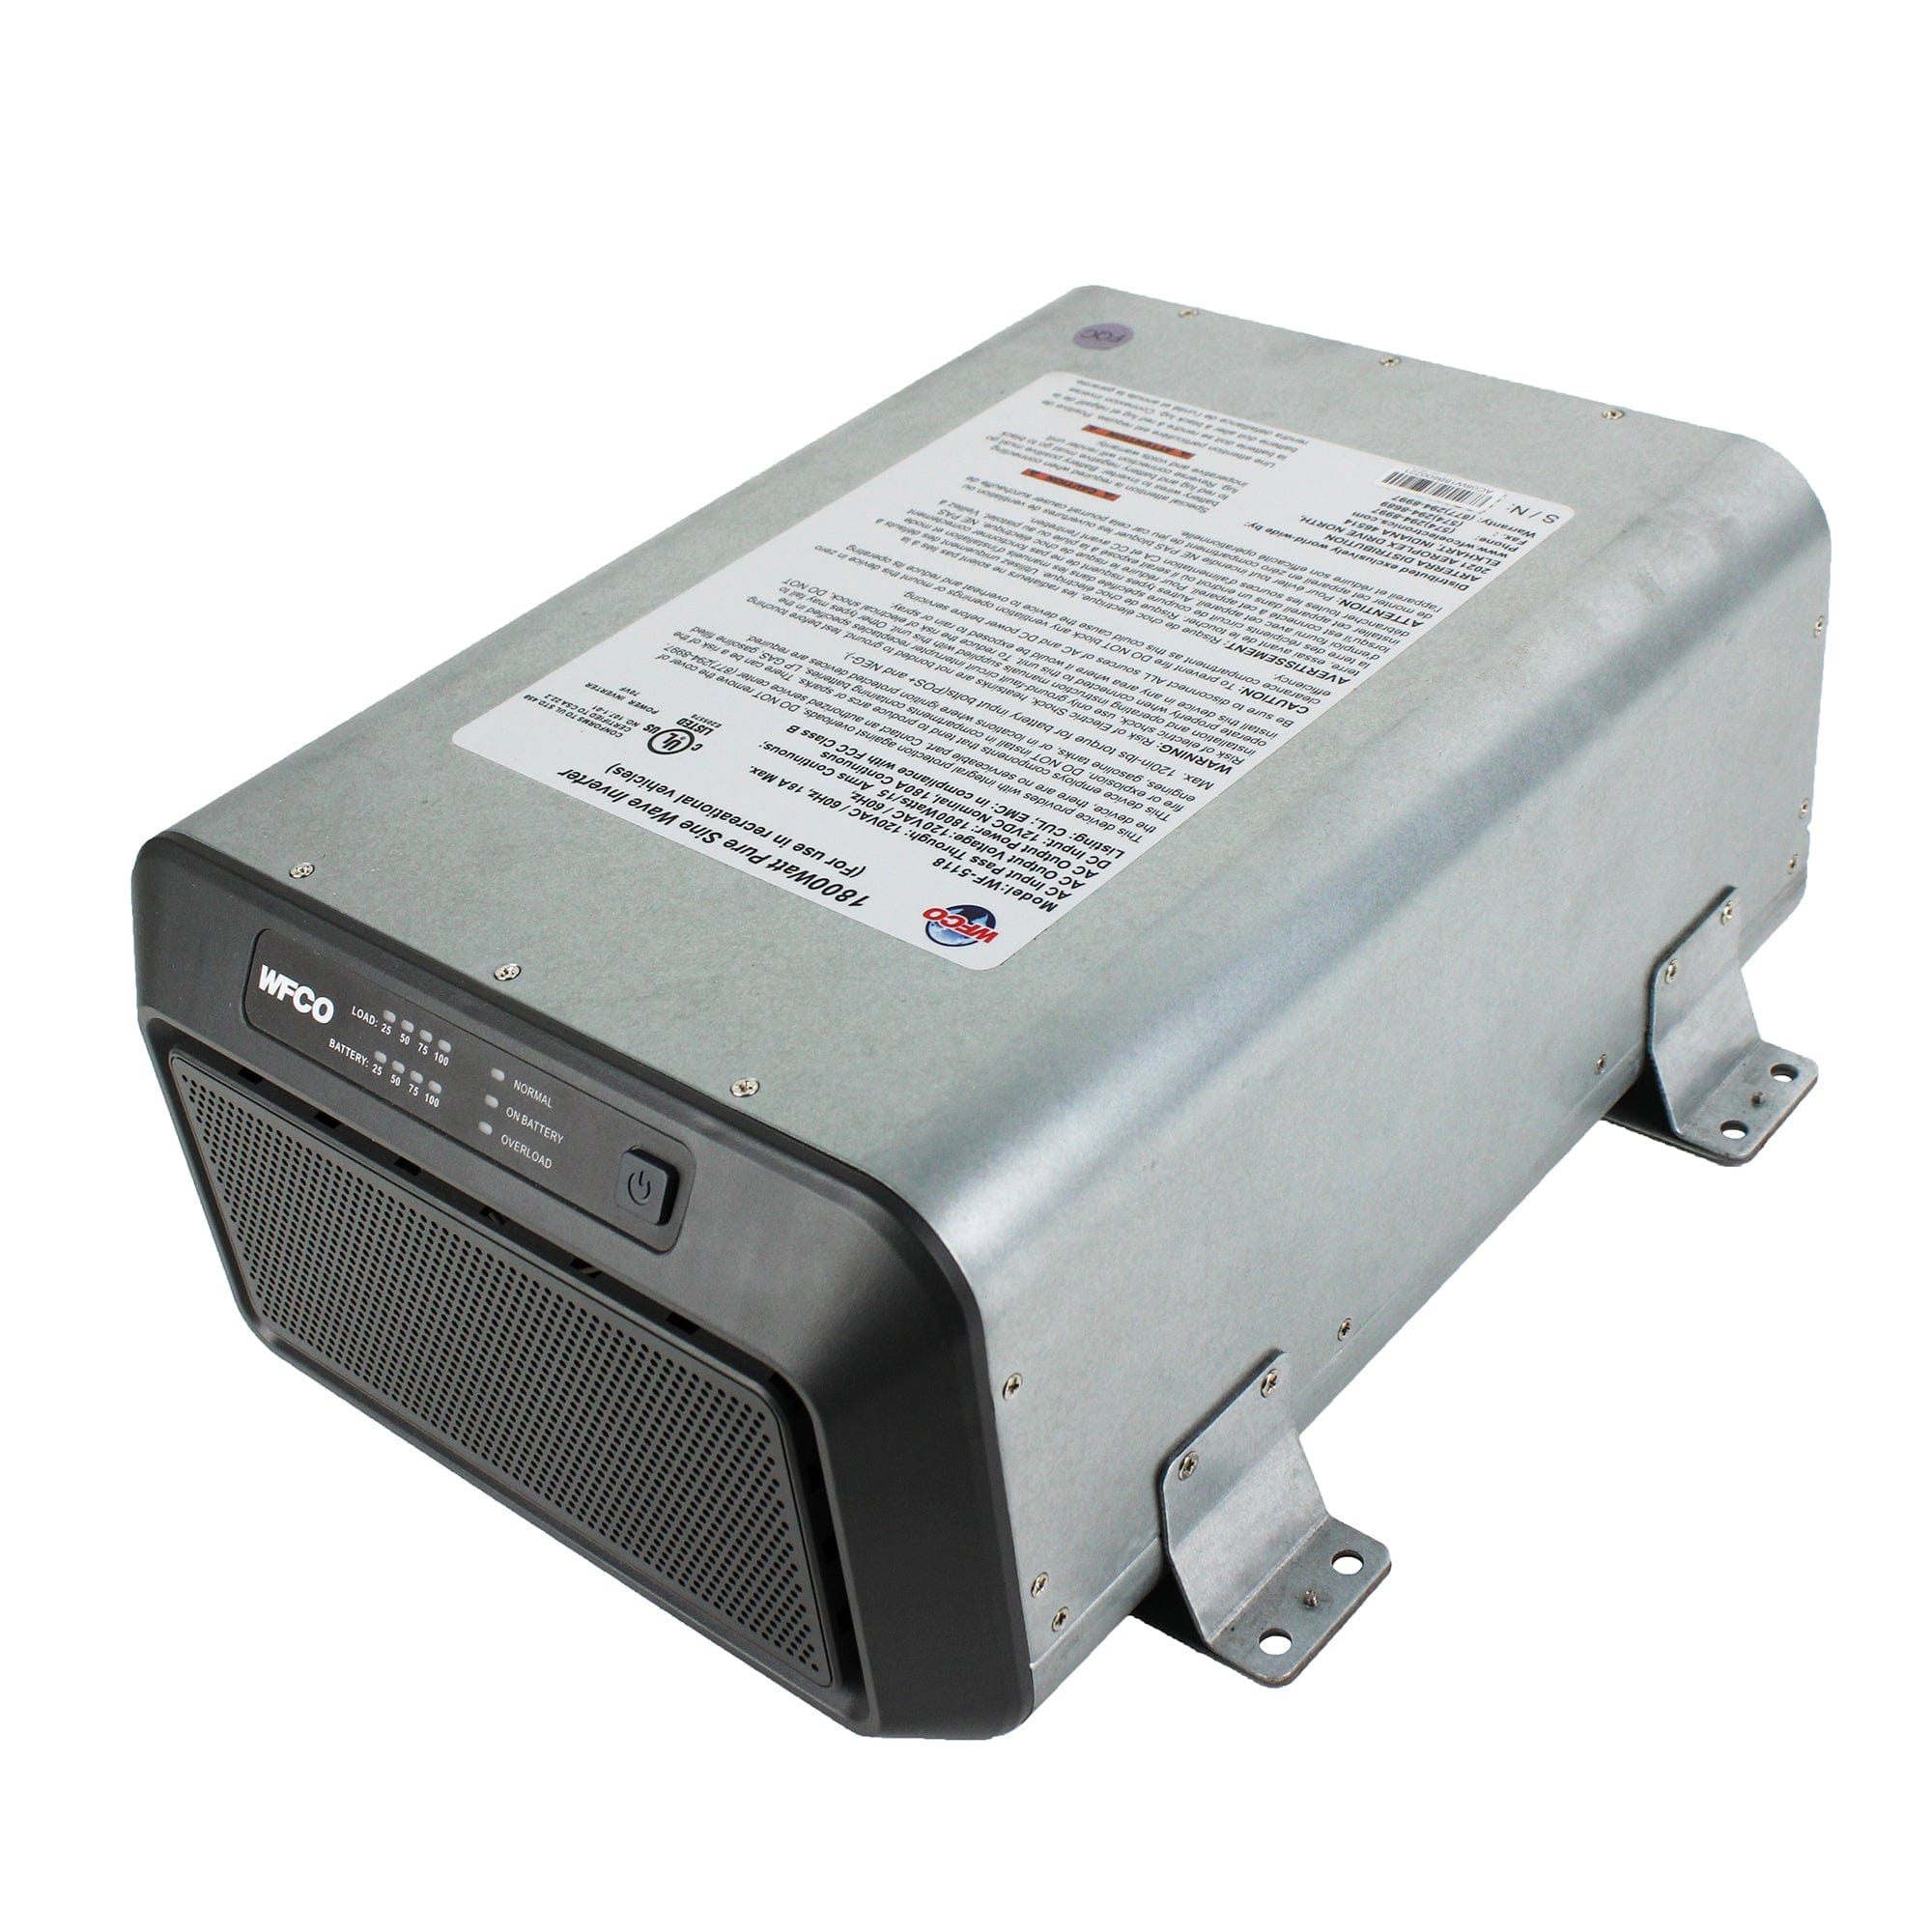 WFCO WF-5118 1800 Watt Power Inverter